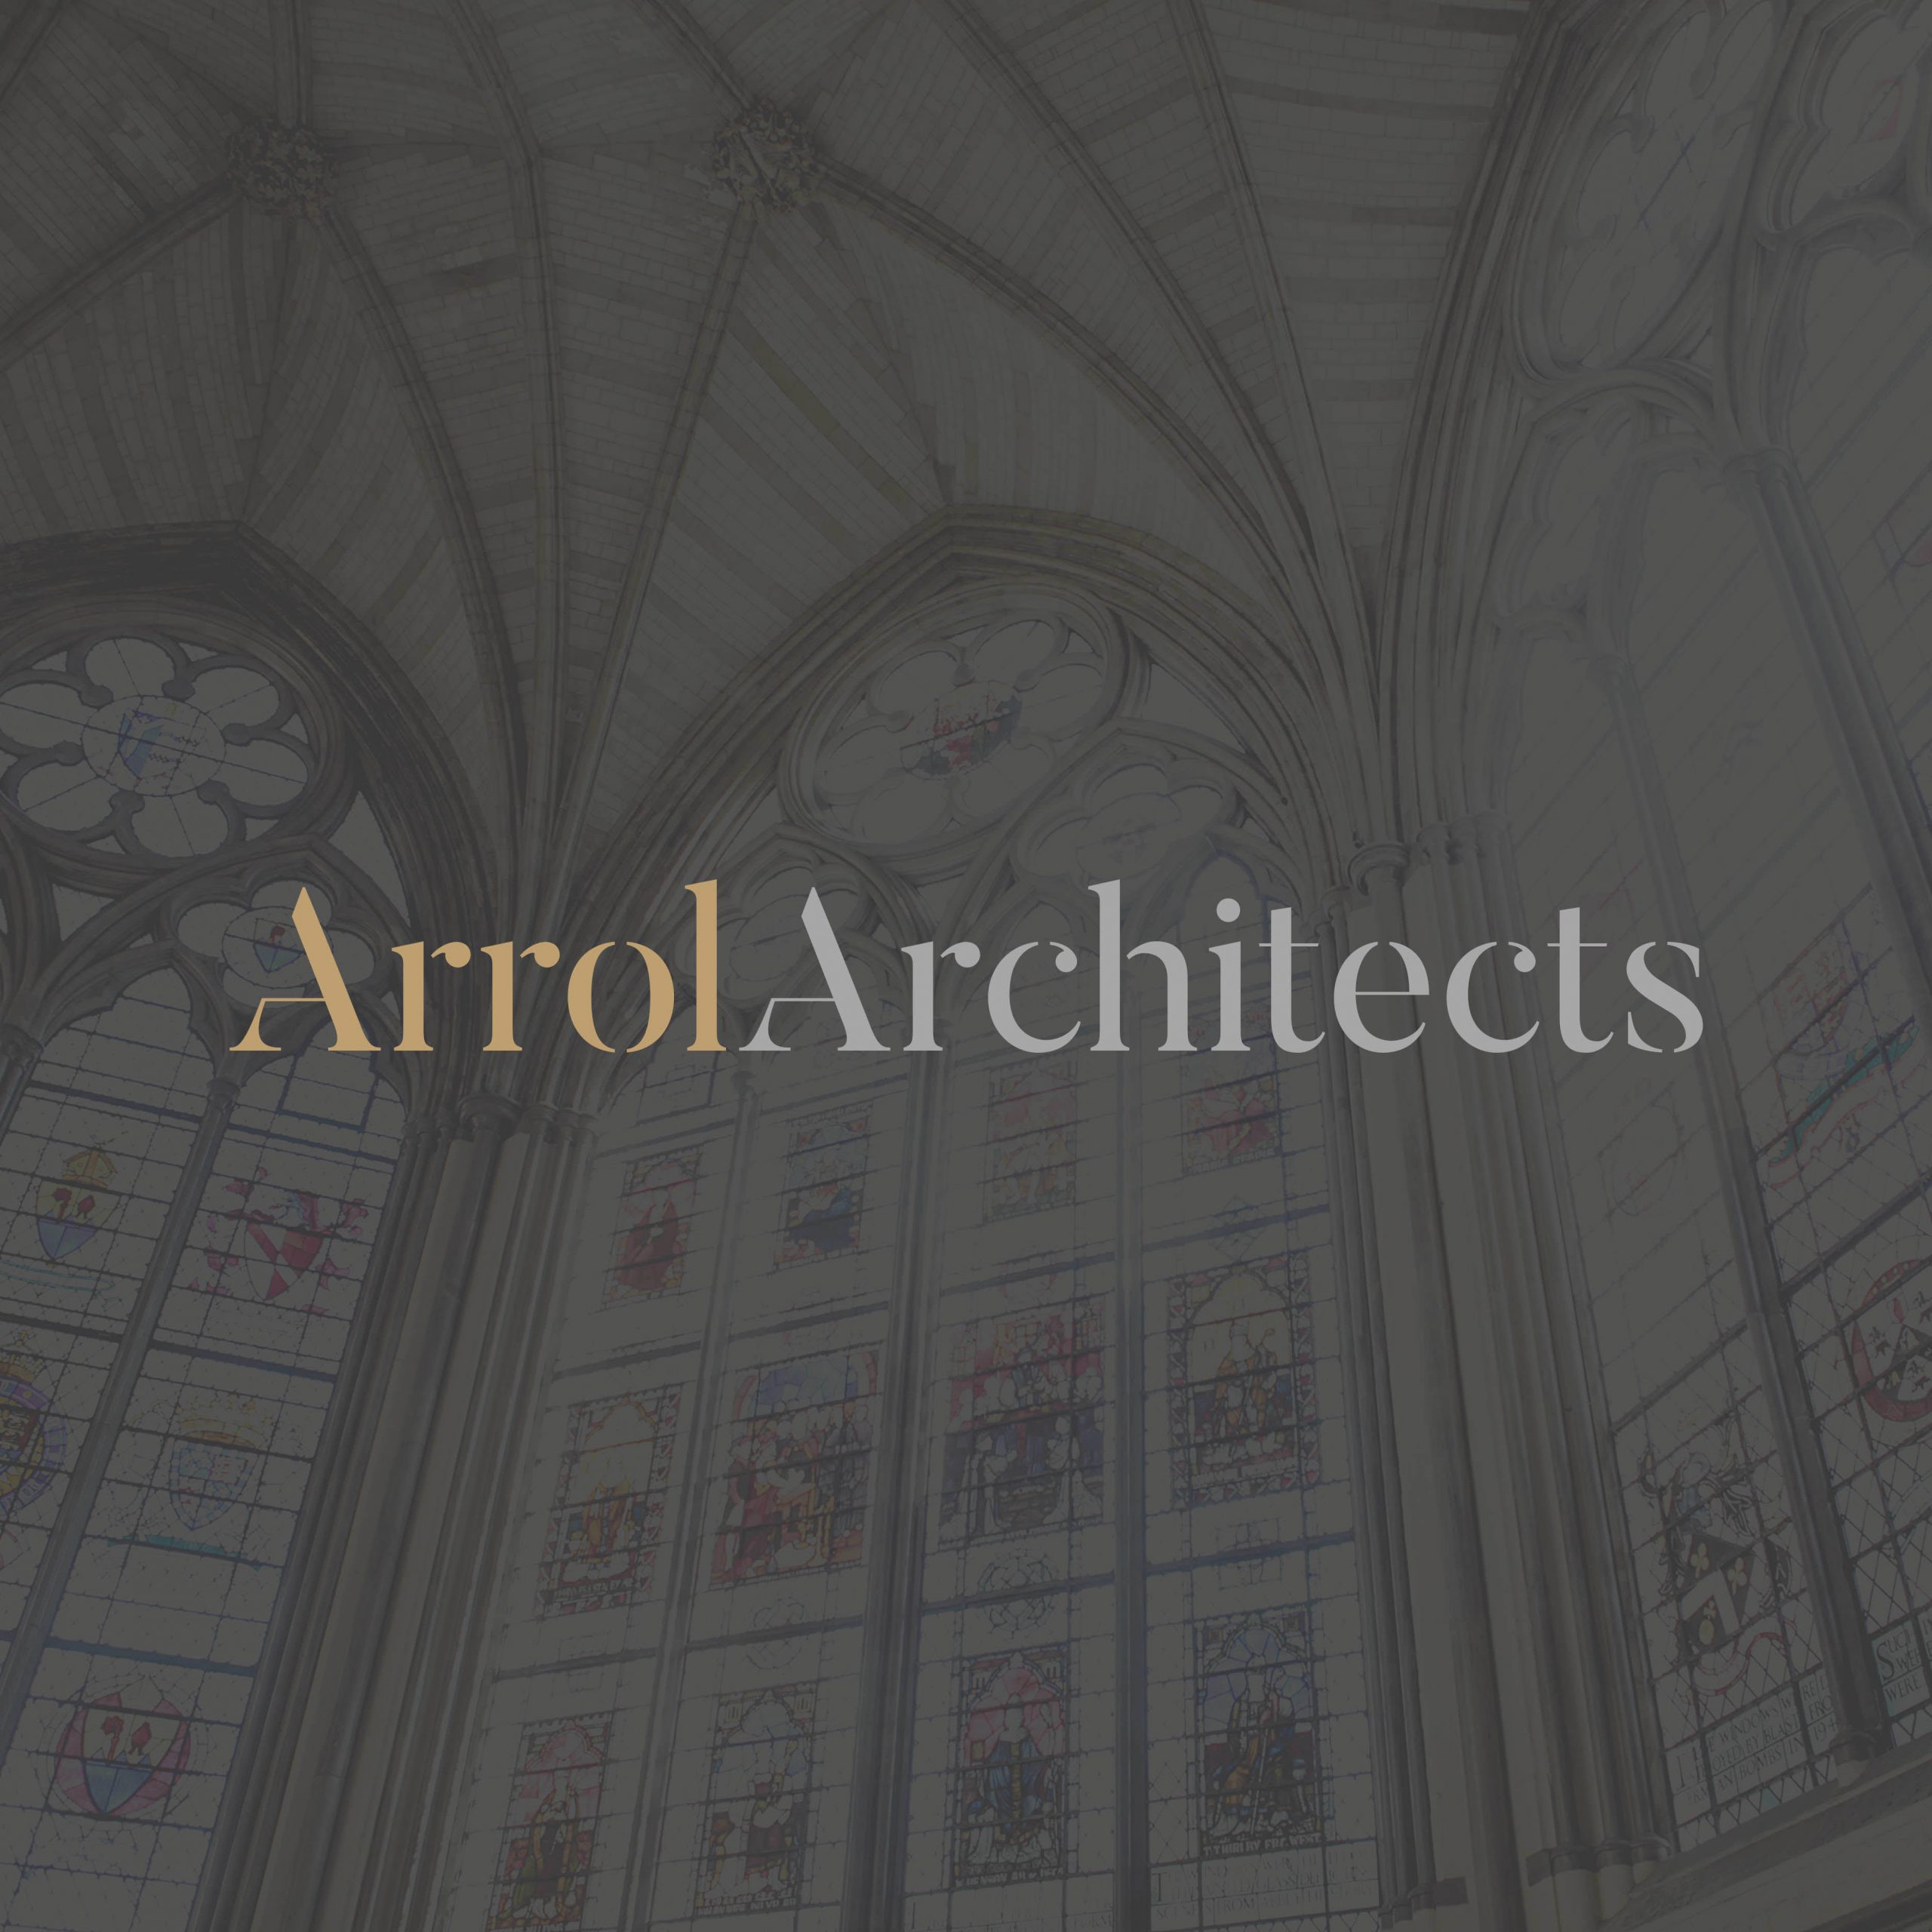 Arrol Architects New Branding